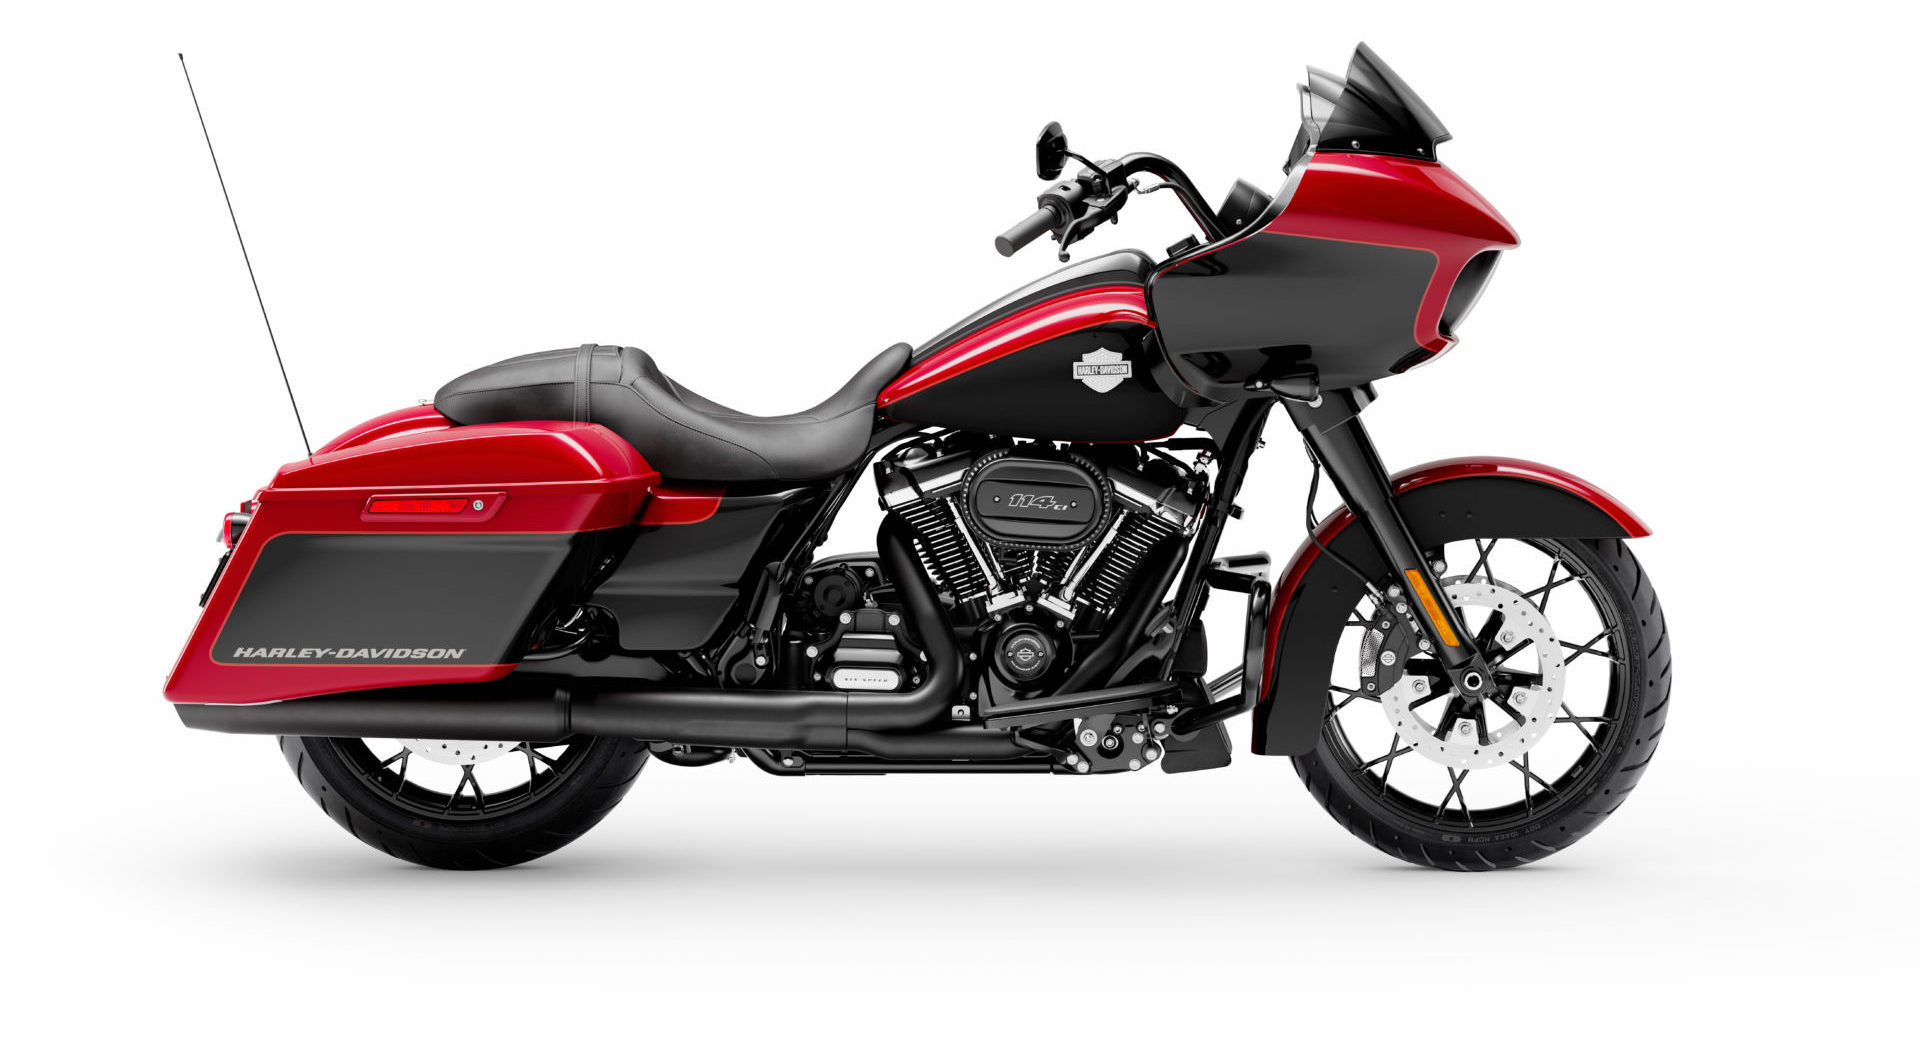 A stock 2021-model Harley-Davidson Road Glide Special. Photo courtesy Harley-Davidson.